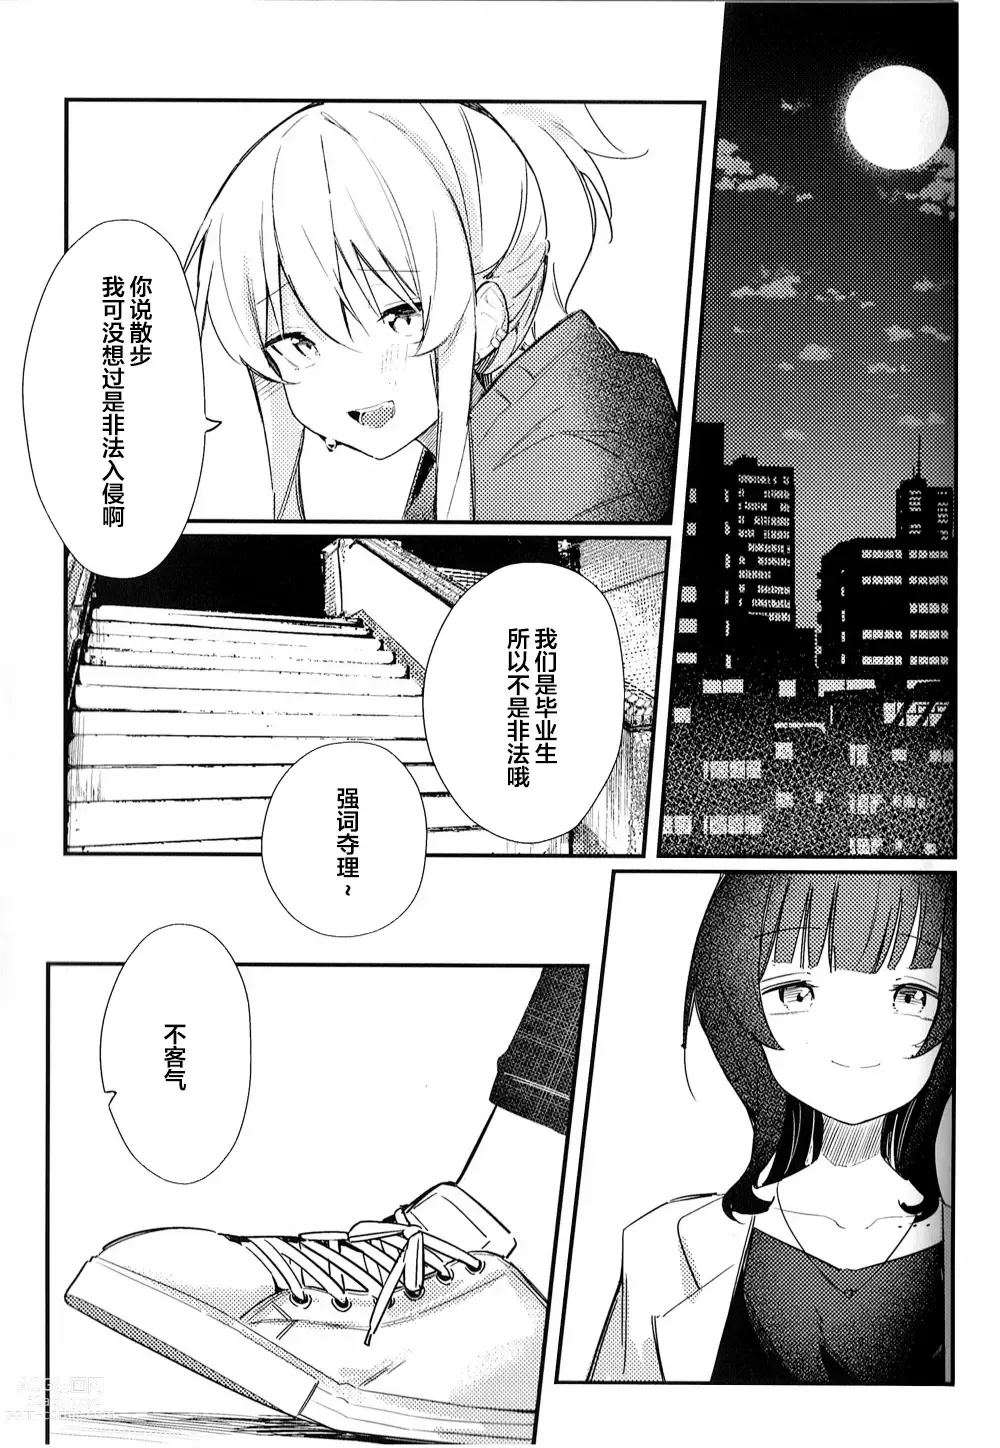 Page 17 of doujinshi MIRROR